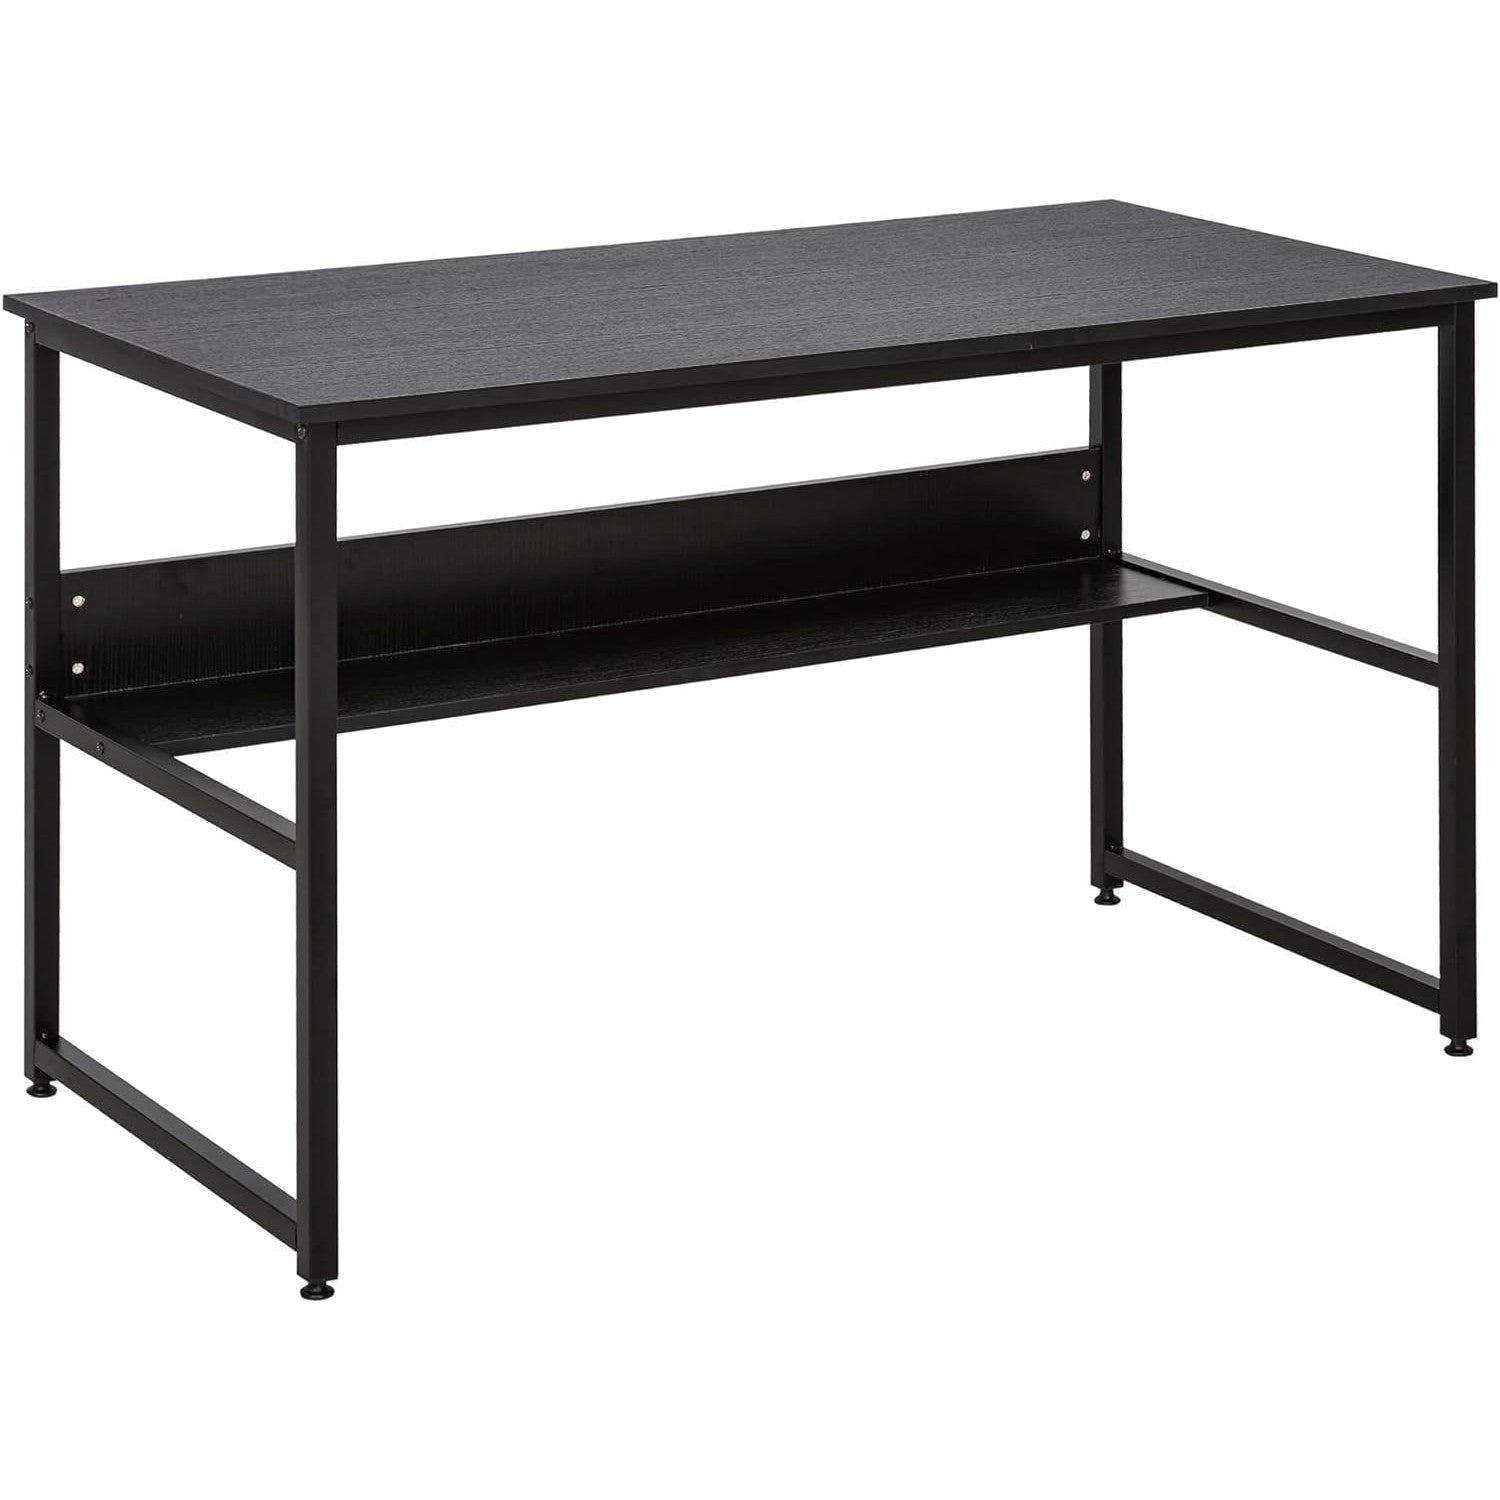 ProperAV Extra 120 x 60cm Home Office Desk with Storage Shelf & Metal Frame (Black)